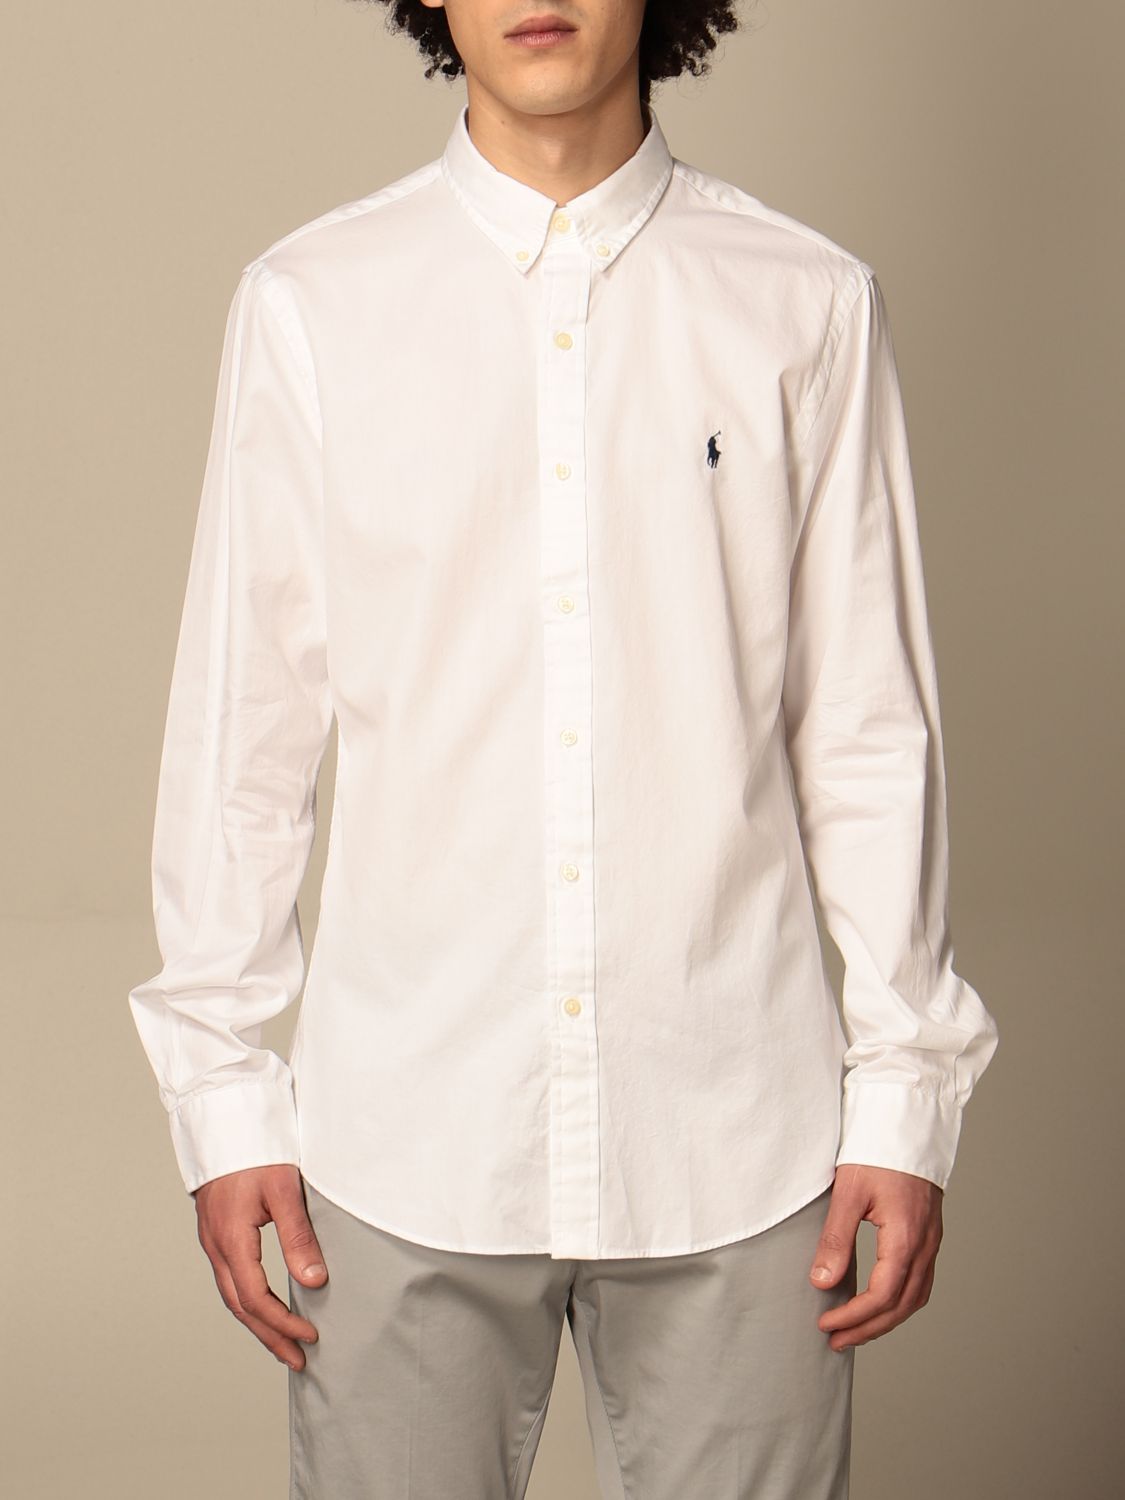 POLO RALPH LAUREN: cotton shirt with button down collar - White | Shirt ...